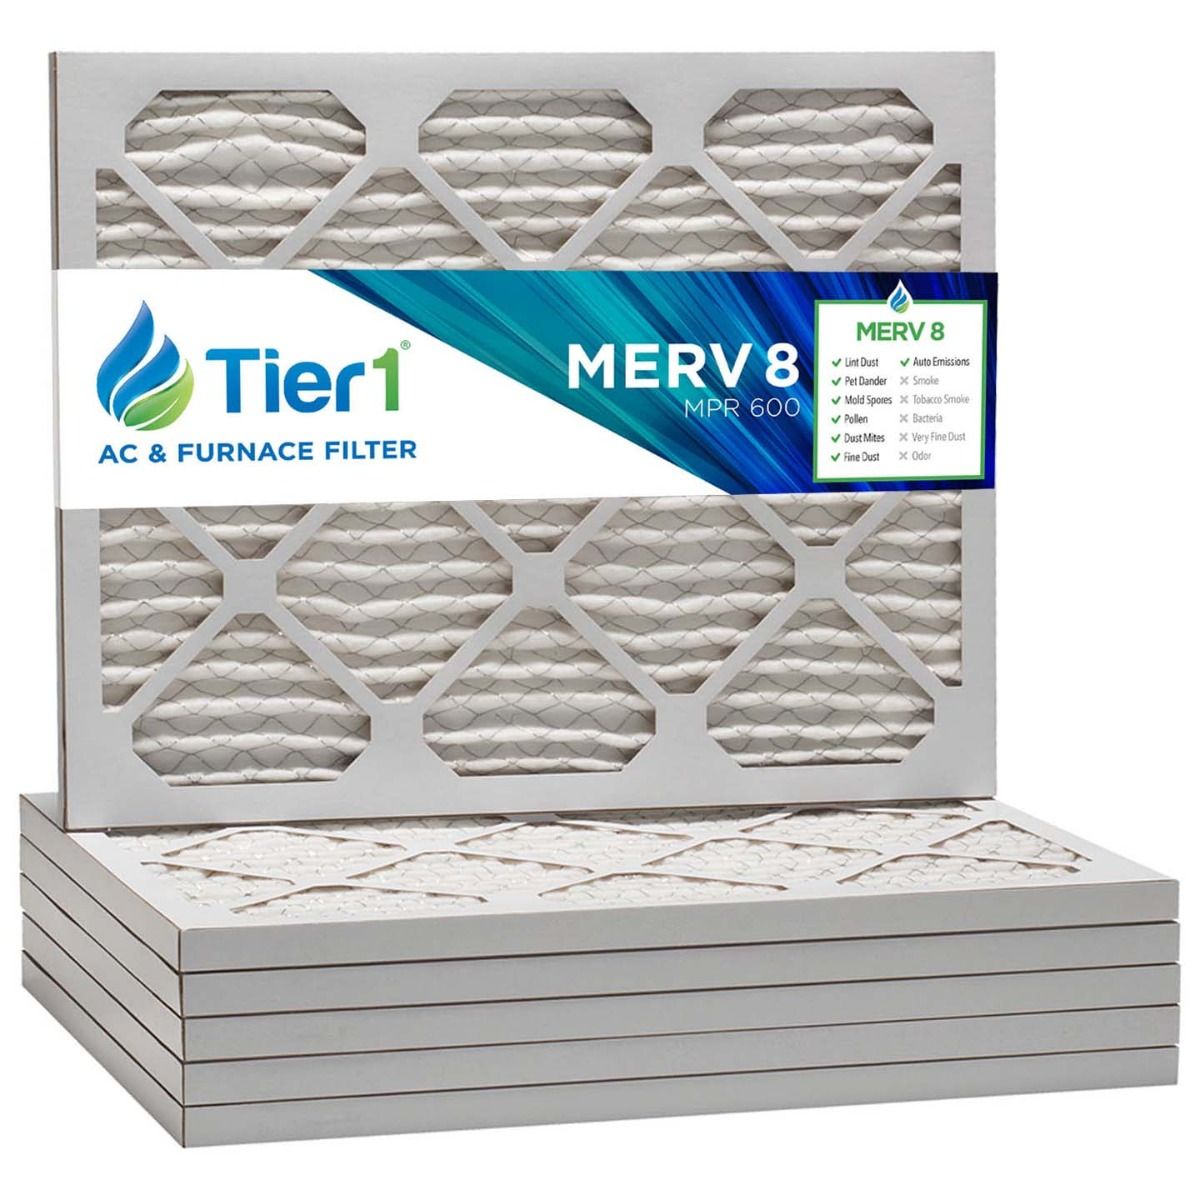 16x20x1 Merv 8 Universal Air Filter By Tier1 (Single Filter)